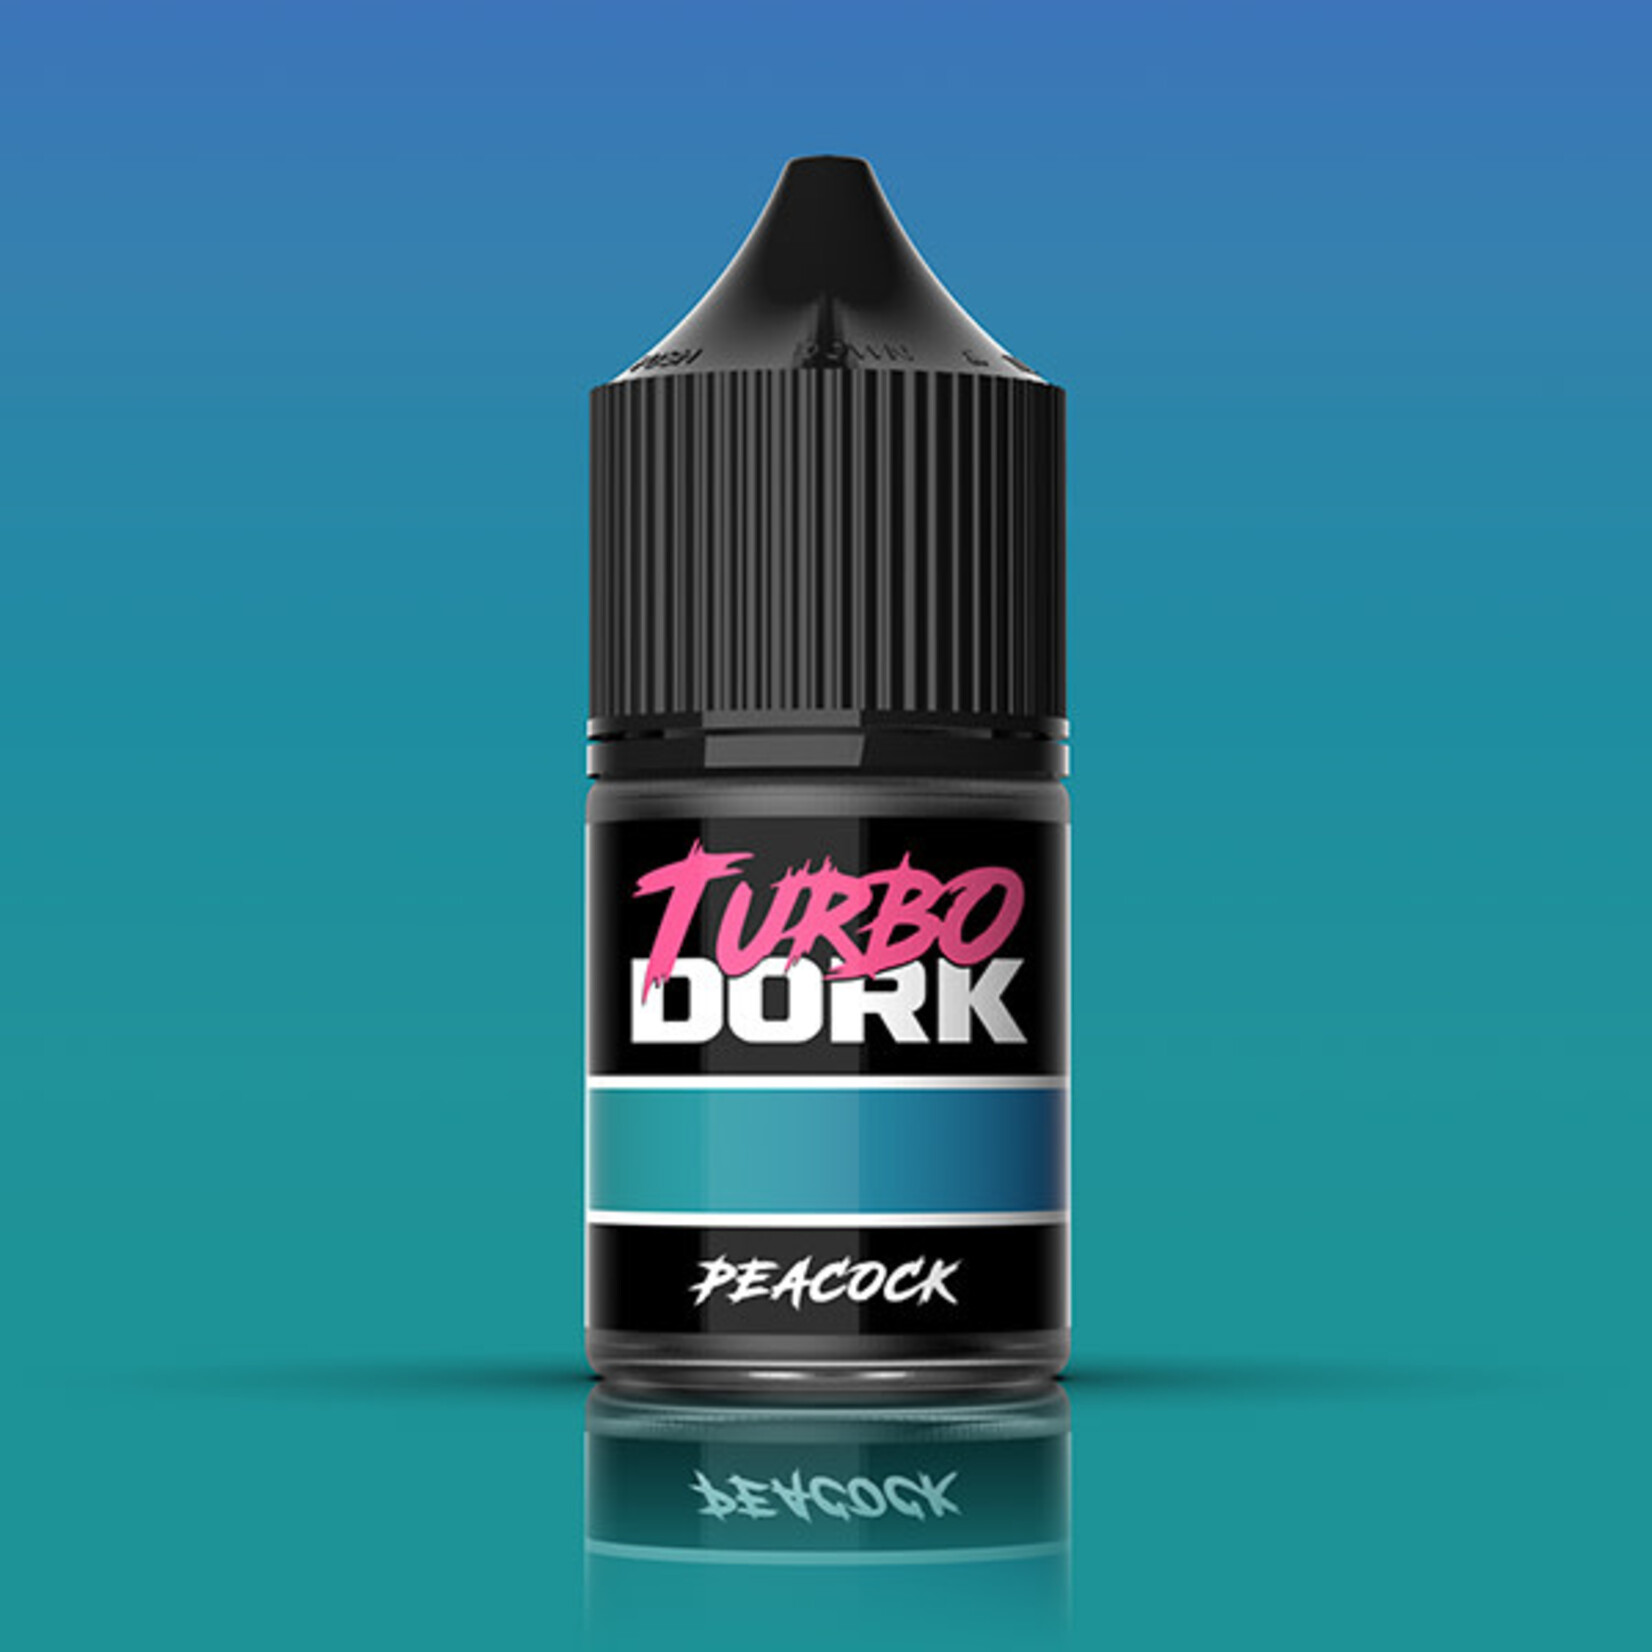 Turbo Dork Turboshift Acrylic Paint - Peacock